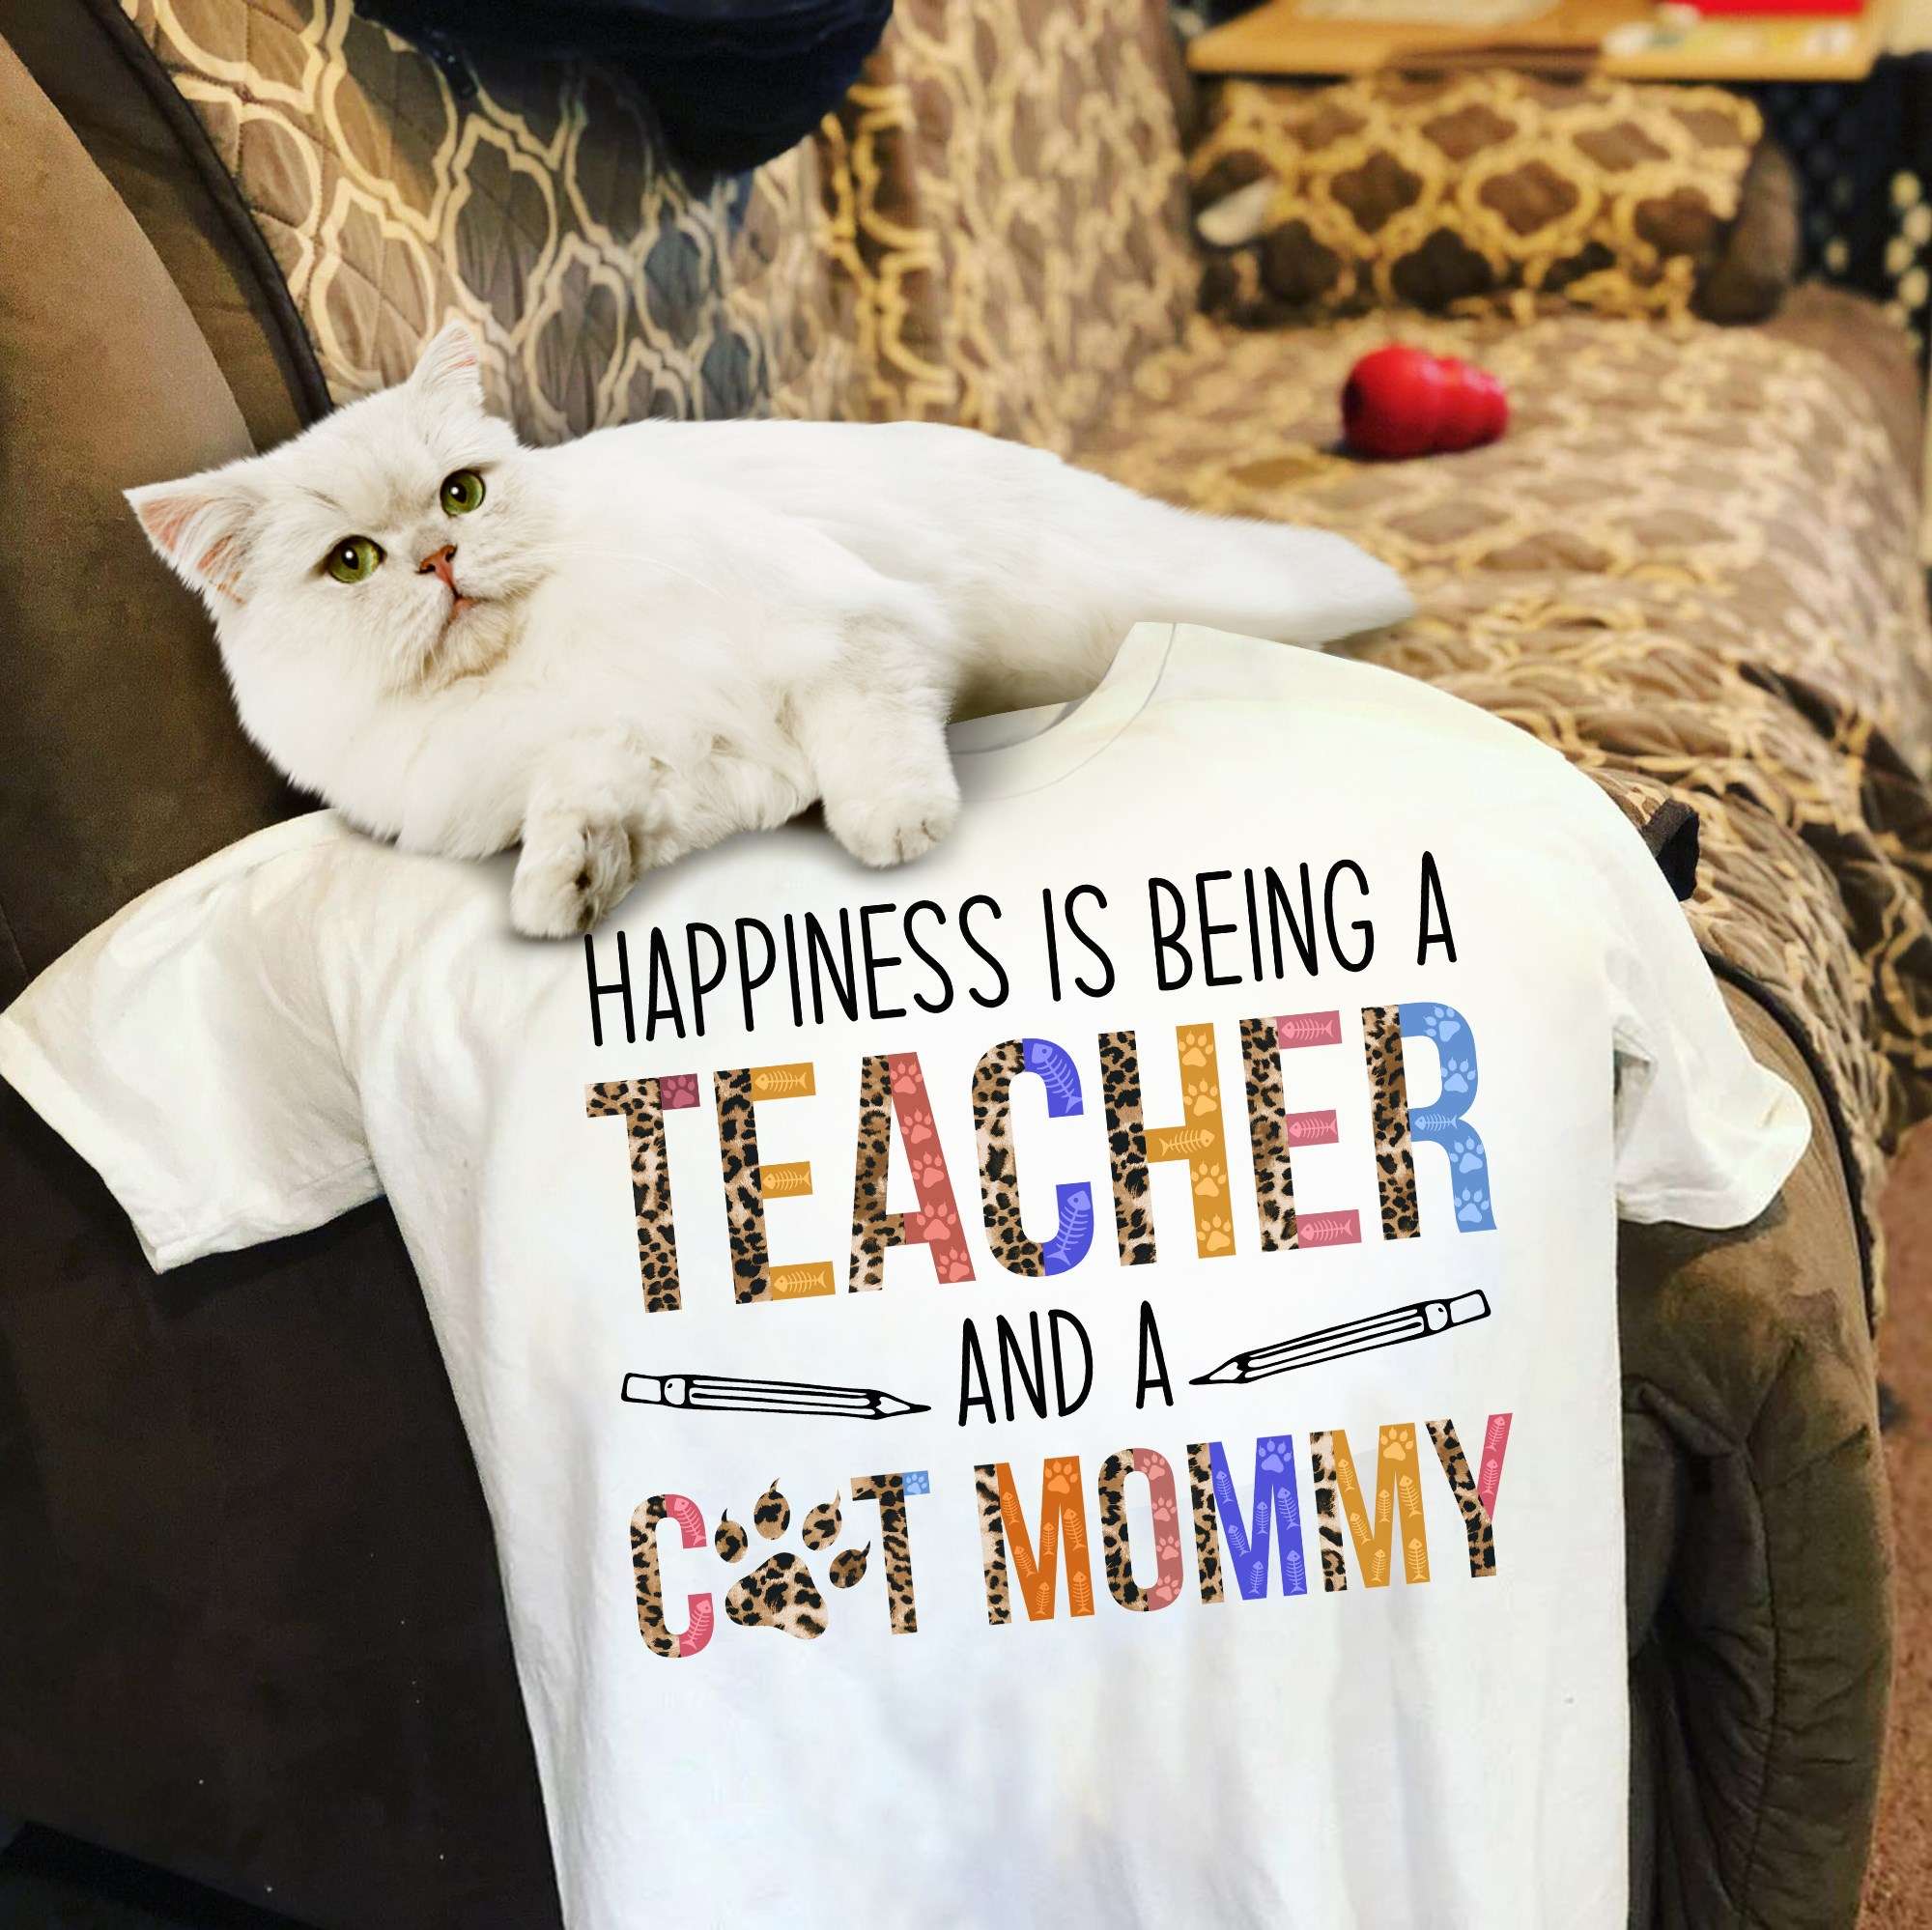 Happiness is being a teacher and a cat mommy - Teacher loves cats, teacher educational job